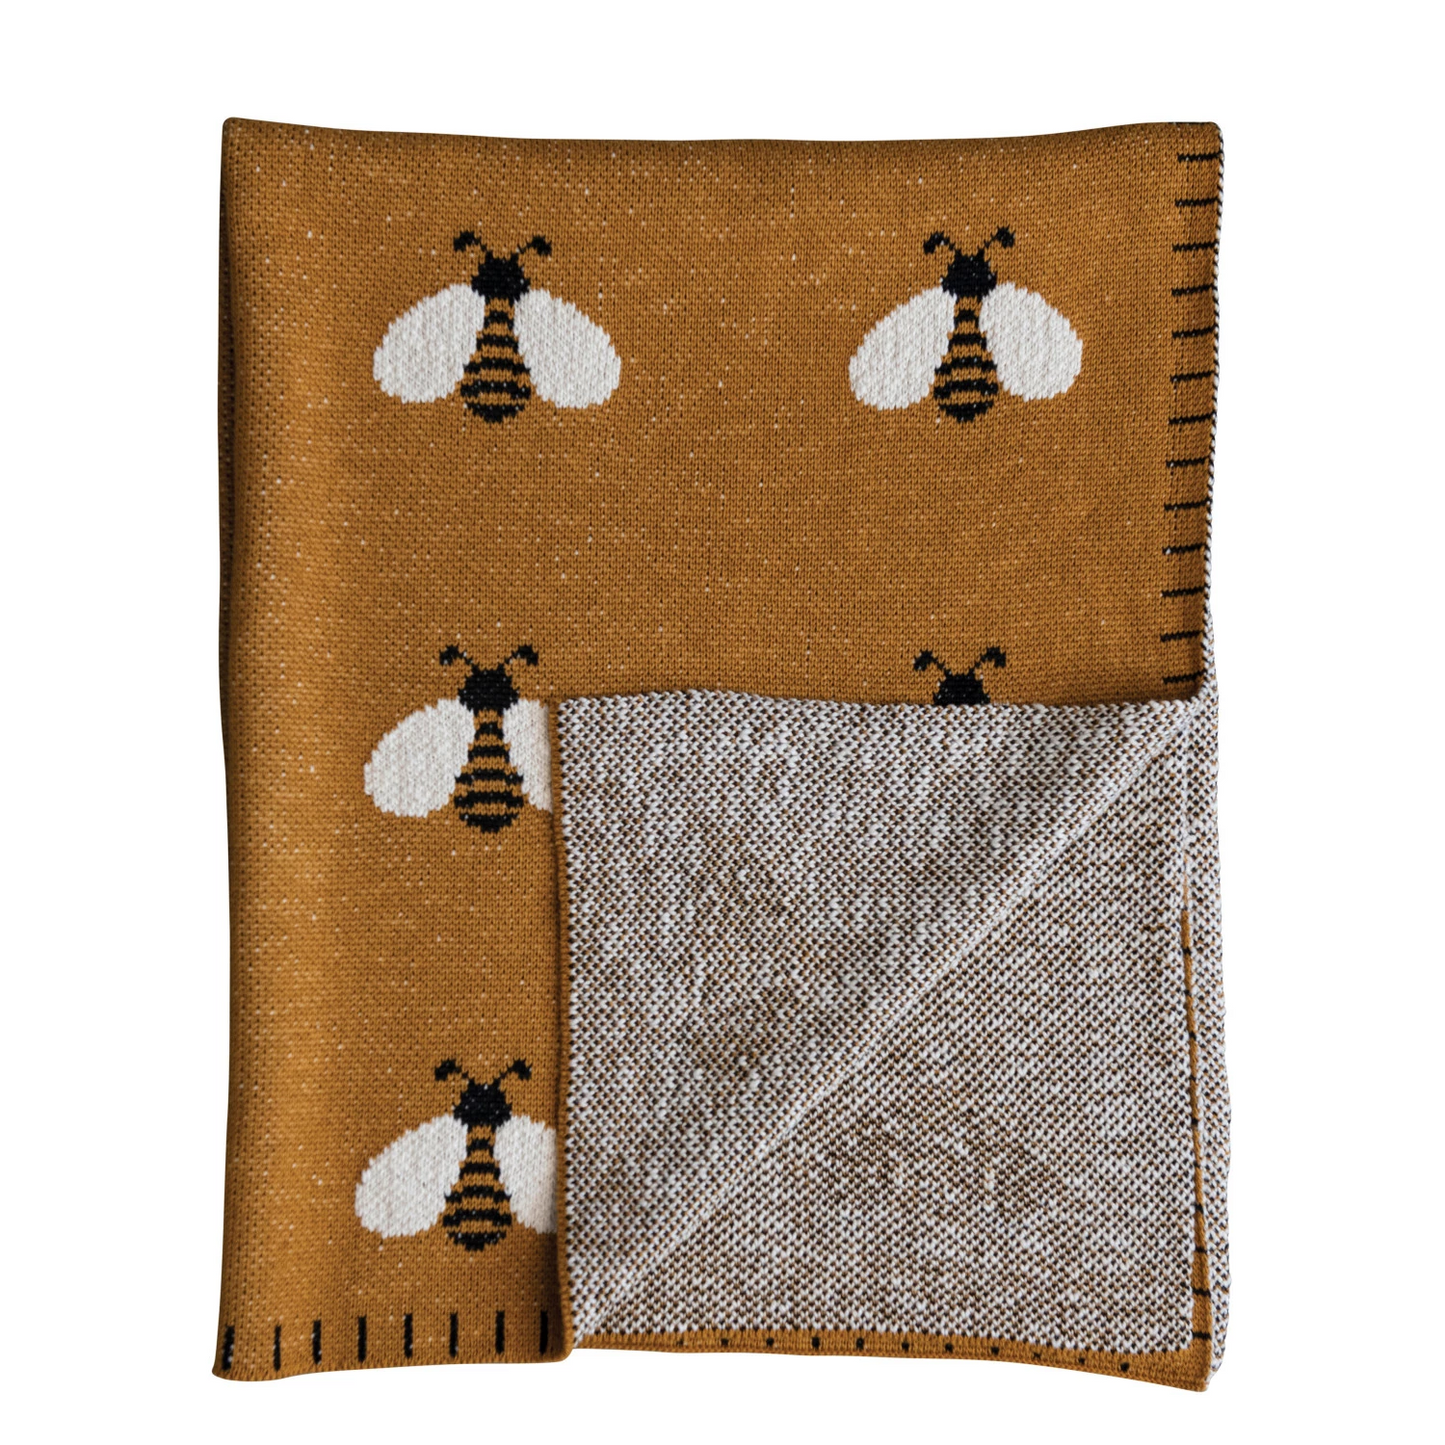 Bee Cotton Knit Blanket - Mustard